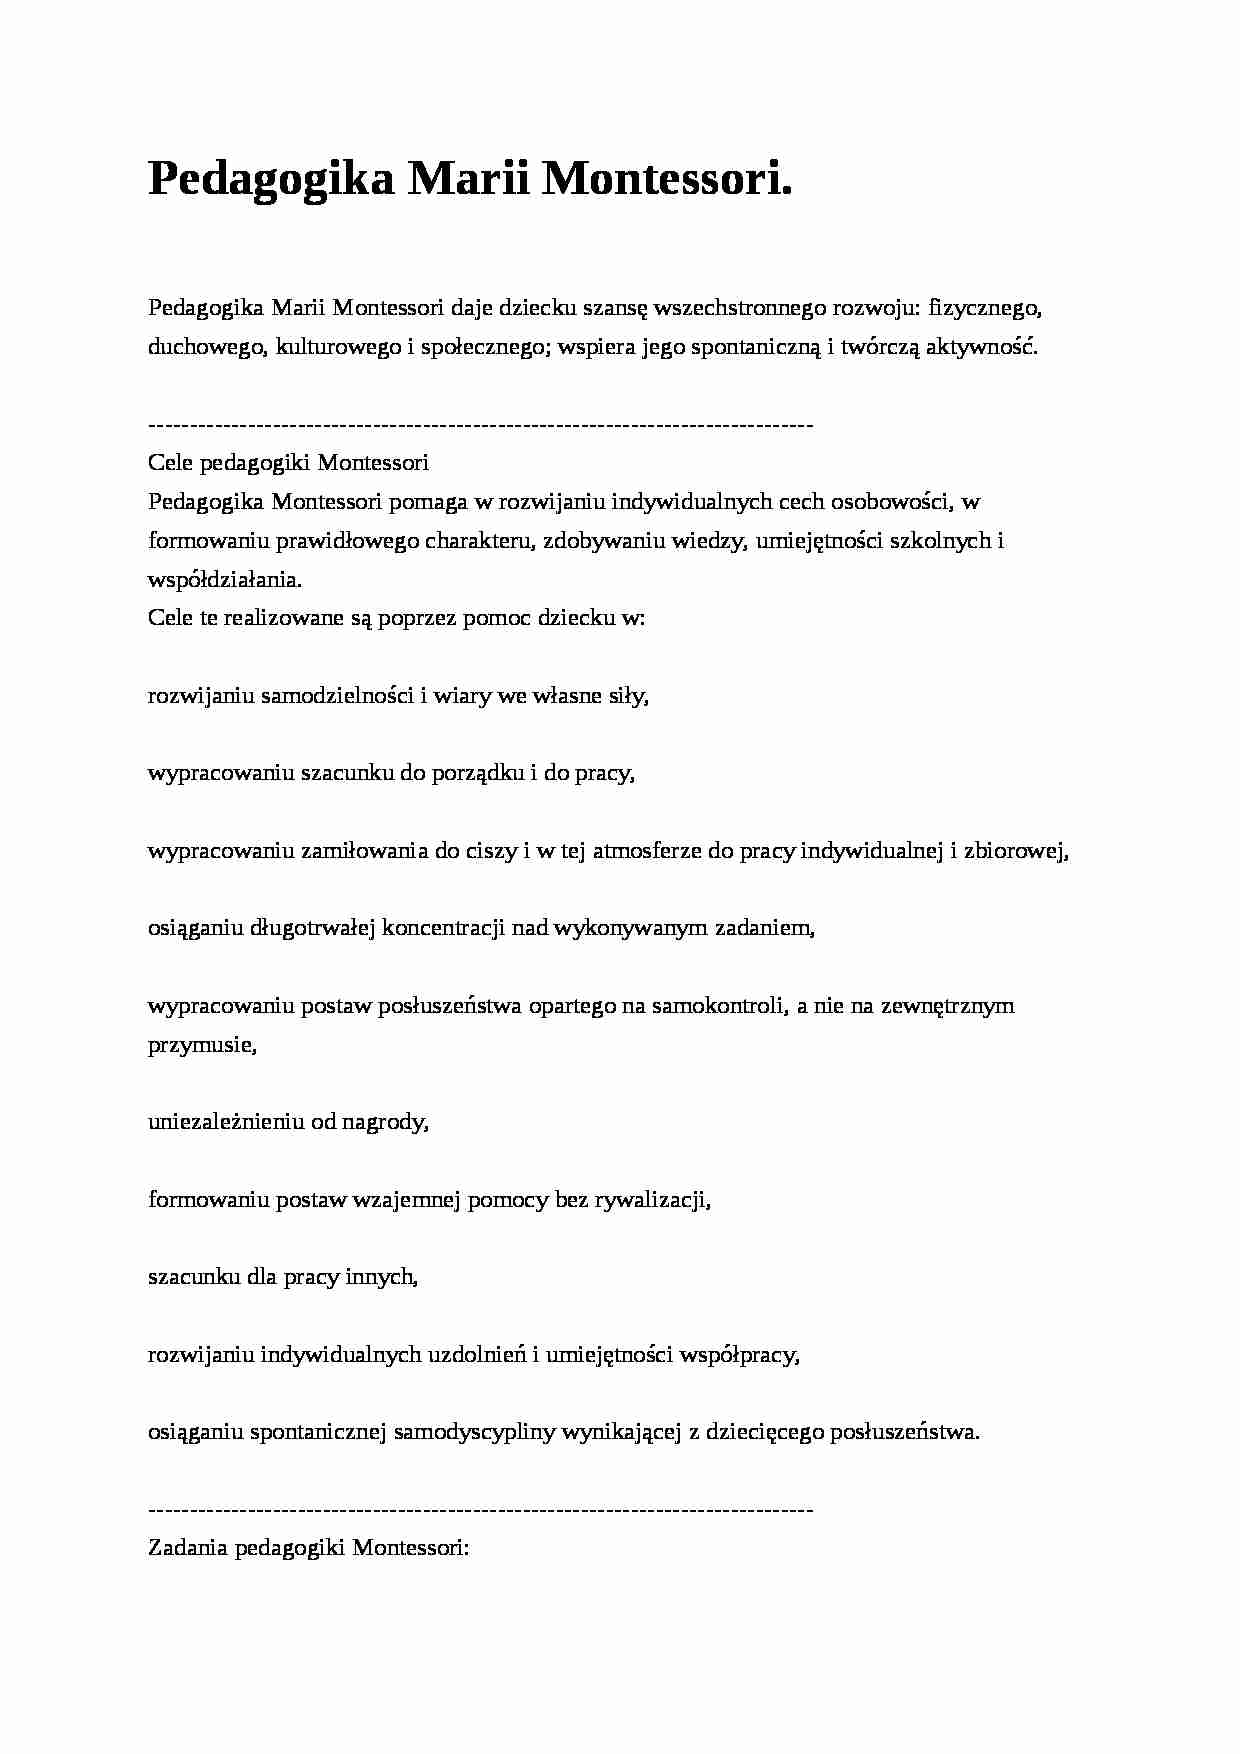 Pedagogika Montessori- pedagogika - strona 1